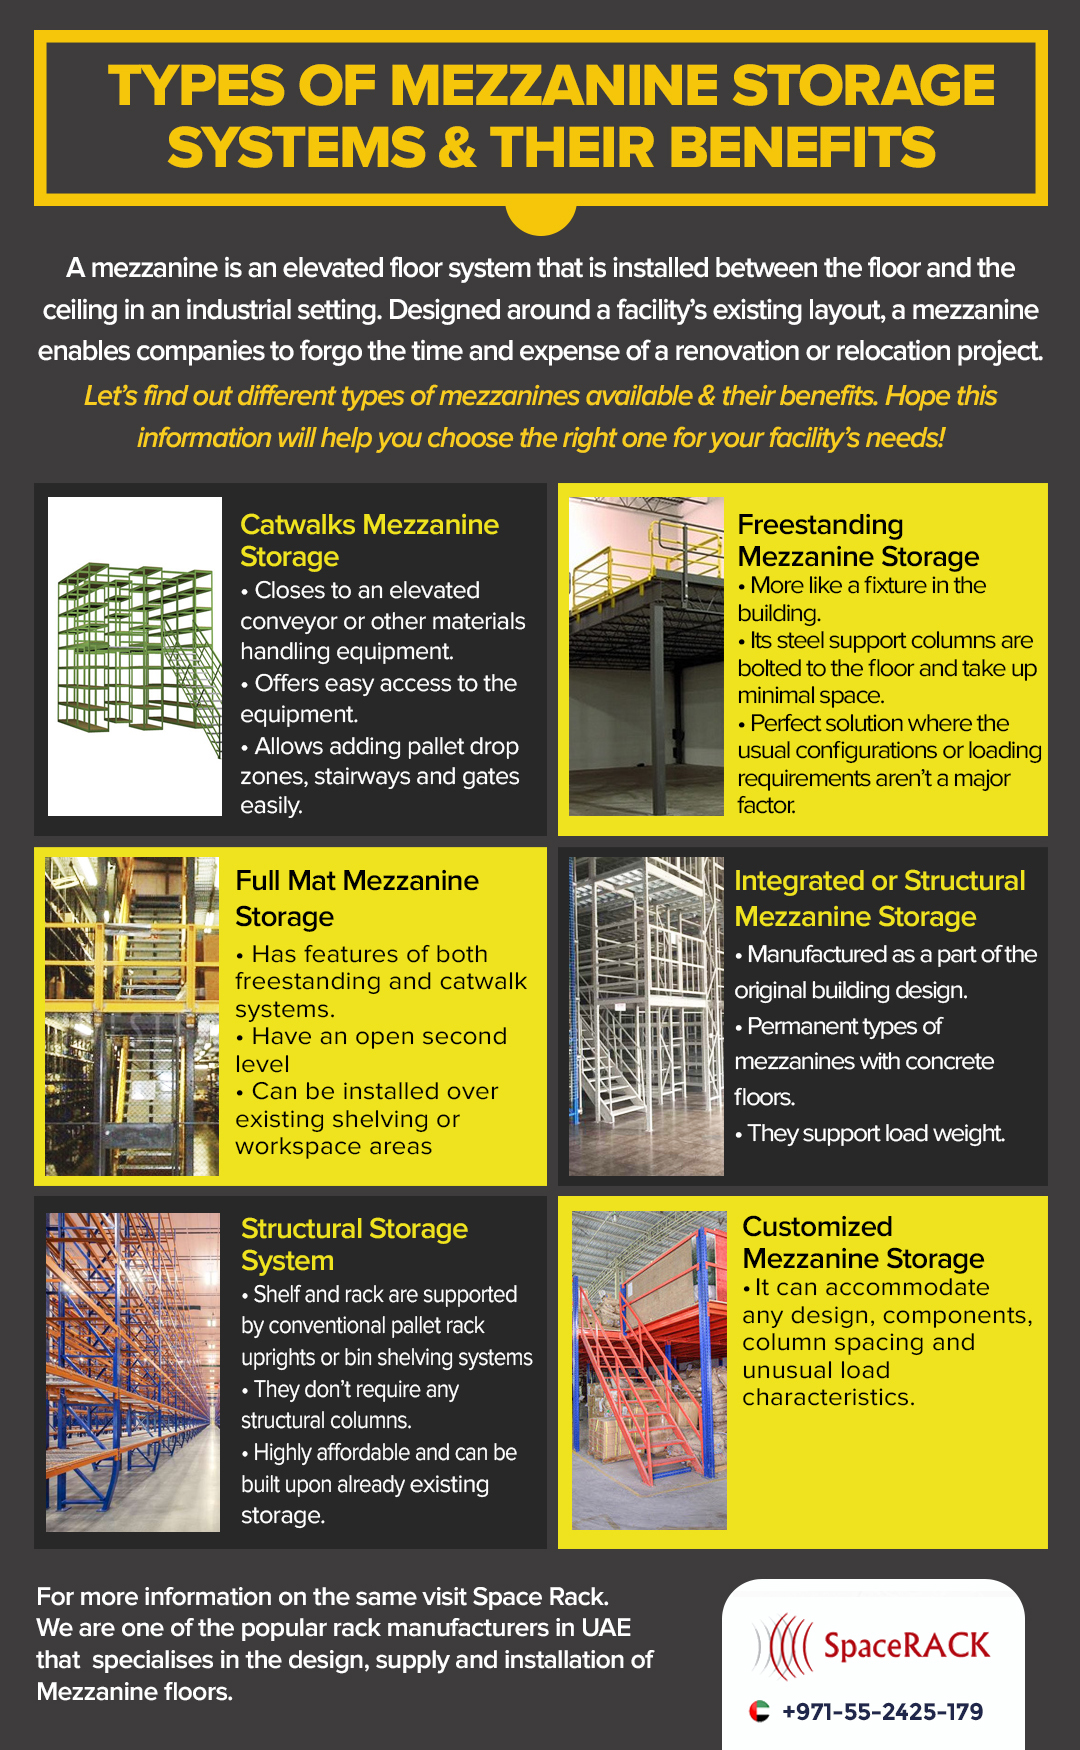 Types of Mezzanine Storage Systems in UAE